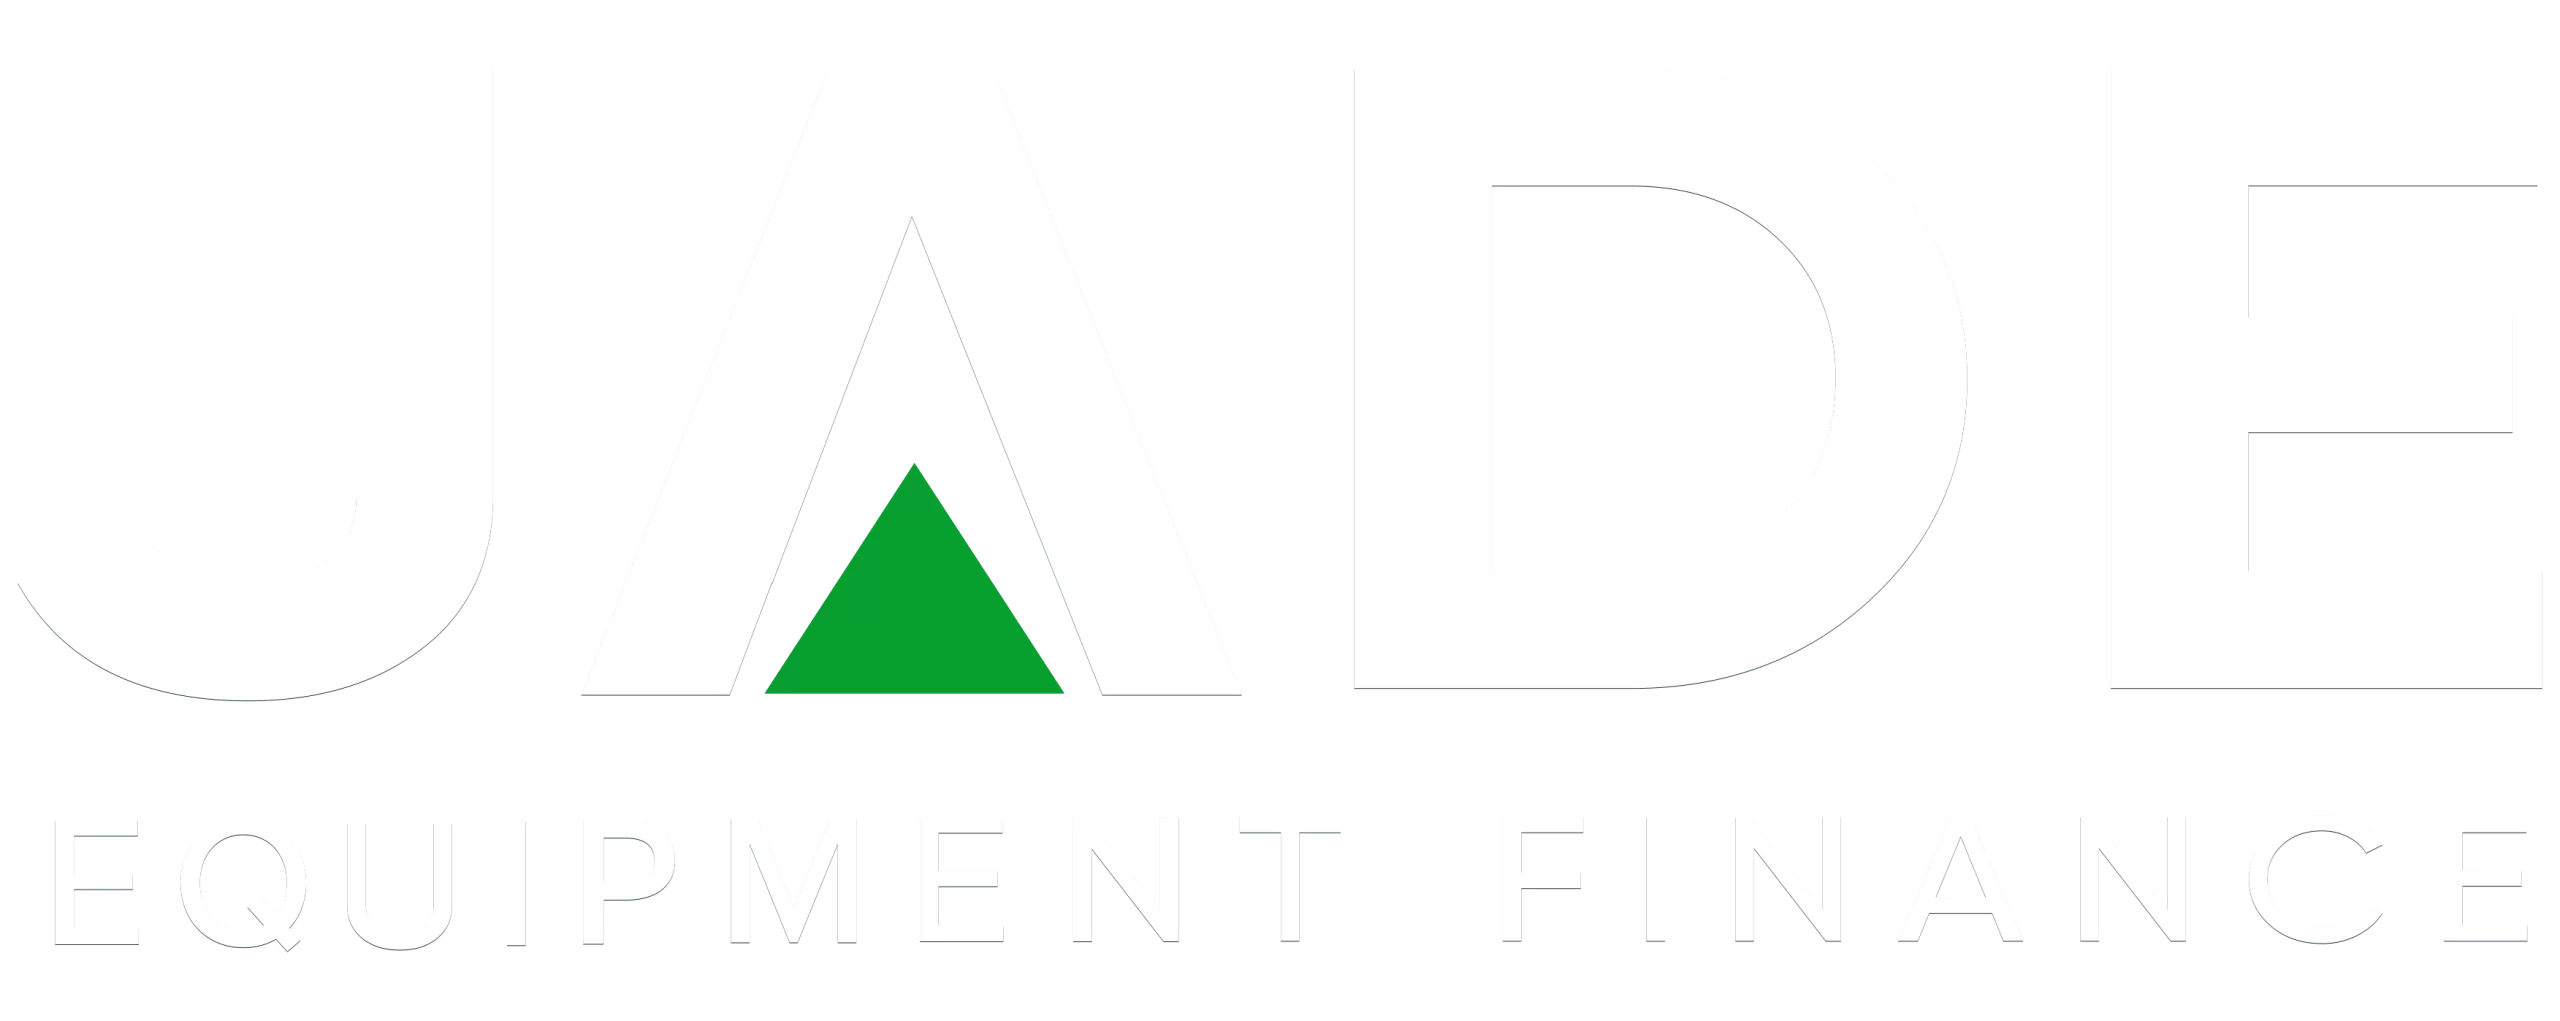 Jade Equipment Finance white logo transparent